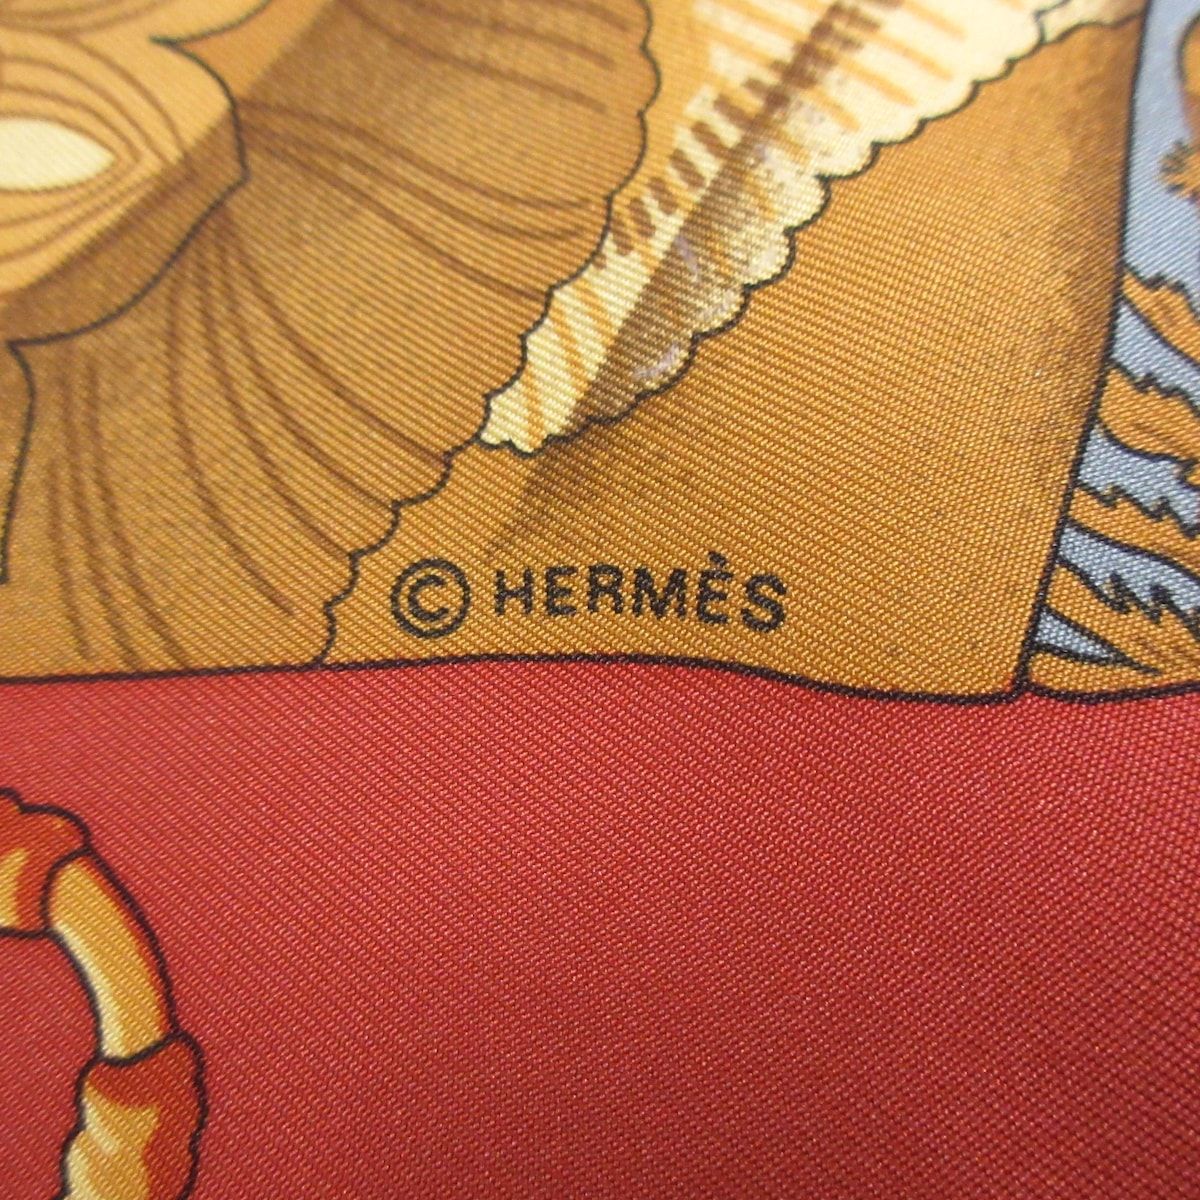 HERMES(エルメス) スカーフ美品 カレ90 グレー×ブラウン×マルチ Soleil de Soie